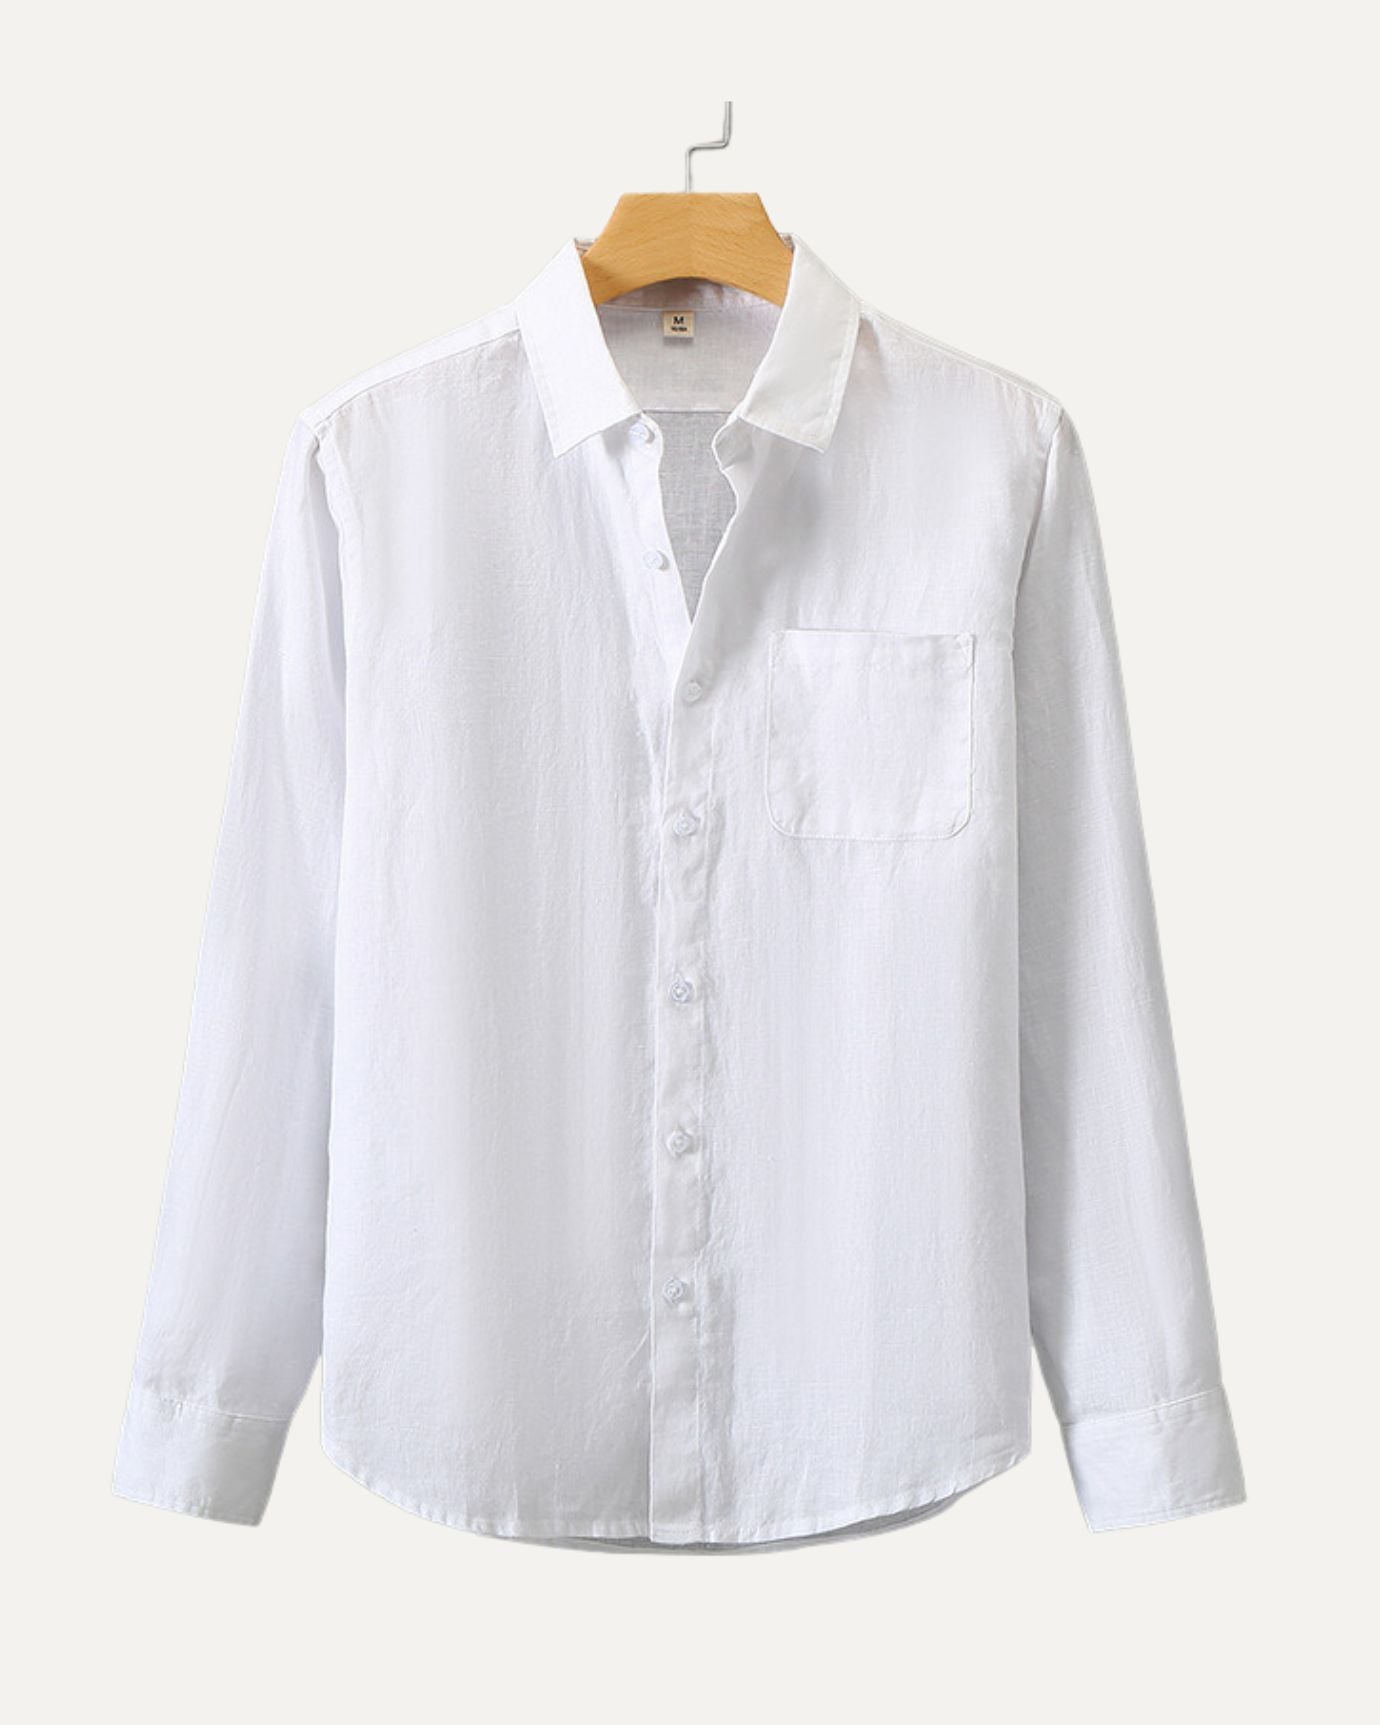 Marbella Linen Shirt 24